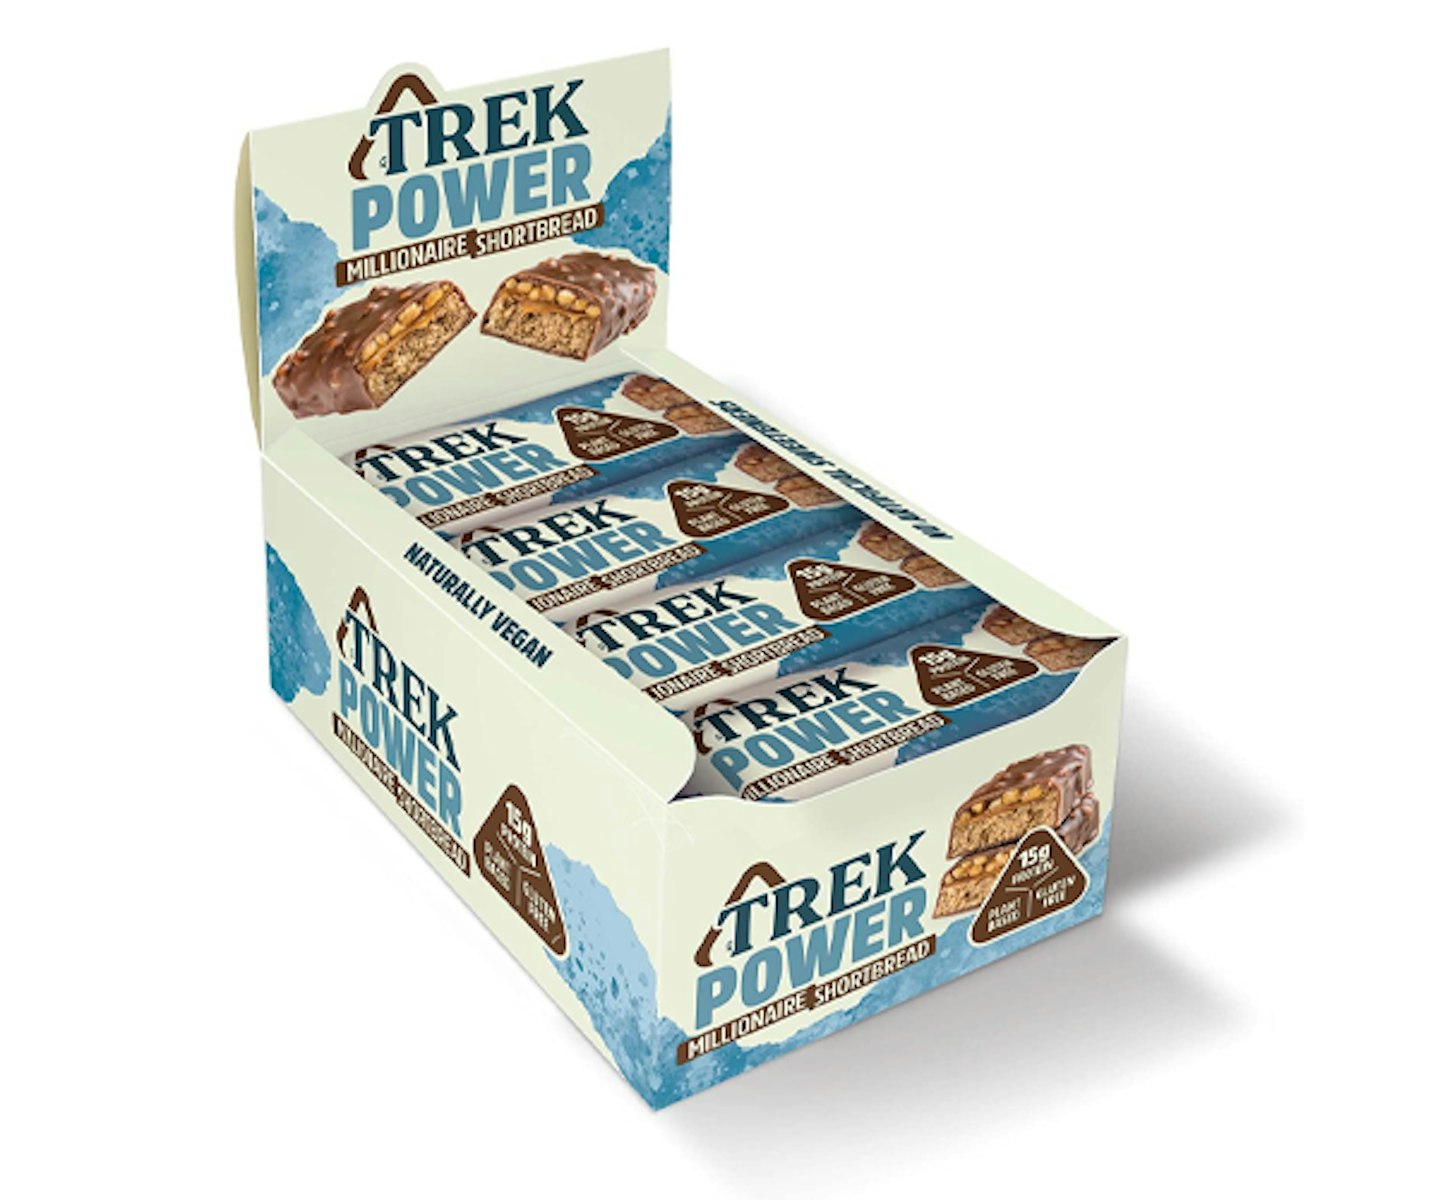 TREK Protein Power Bar Millionaire Shortbread